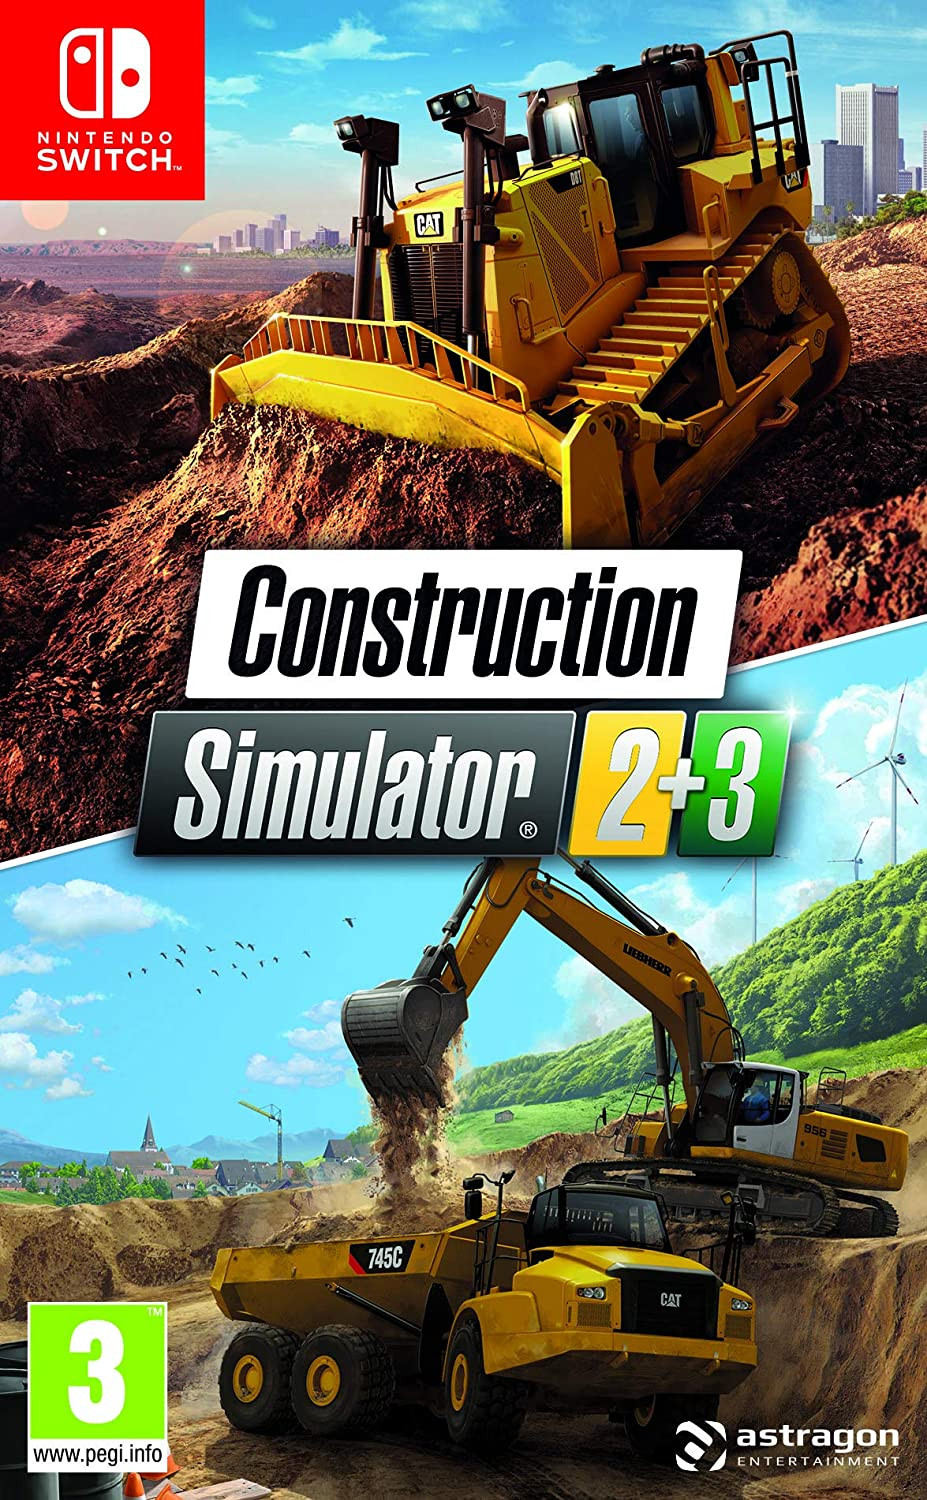 Construction Simulator 2 + 3 Bundle - Nintendo Switch